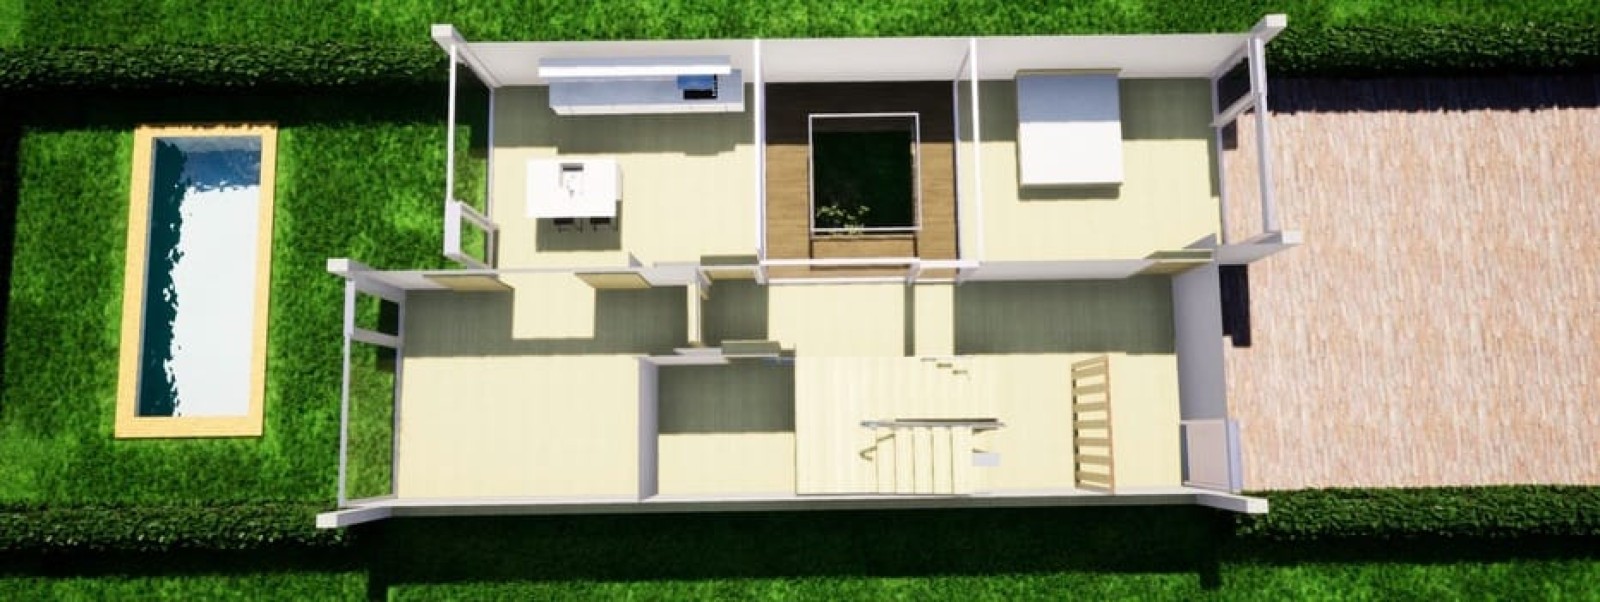 4 bedroom villa, new construction with seaview, for sale in Tavira, Algarve_229491